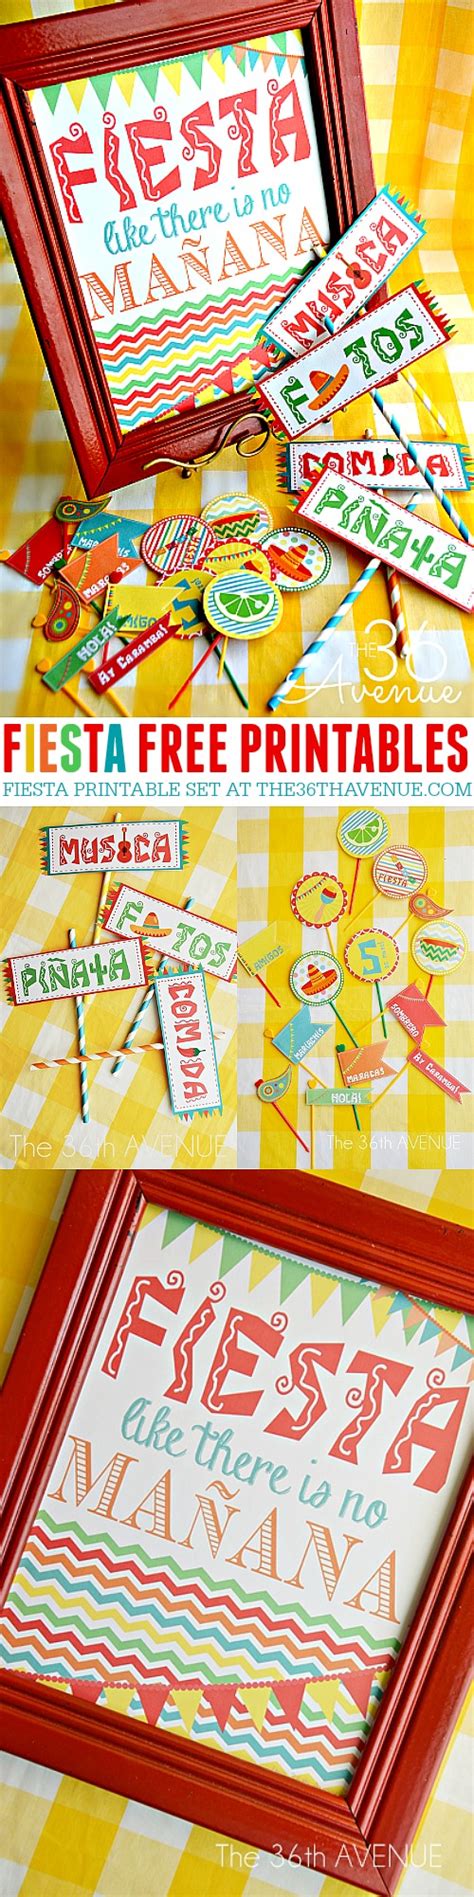 fiesta party kit printable   avenue